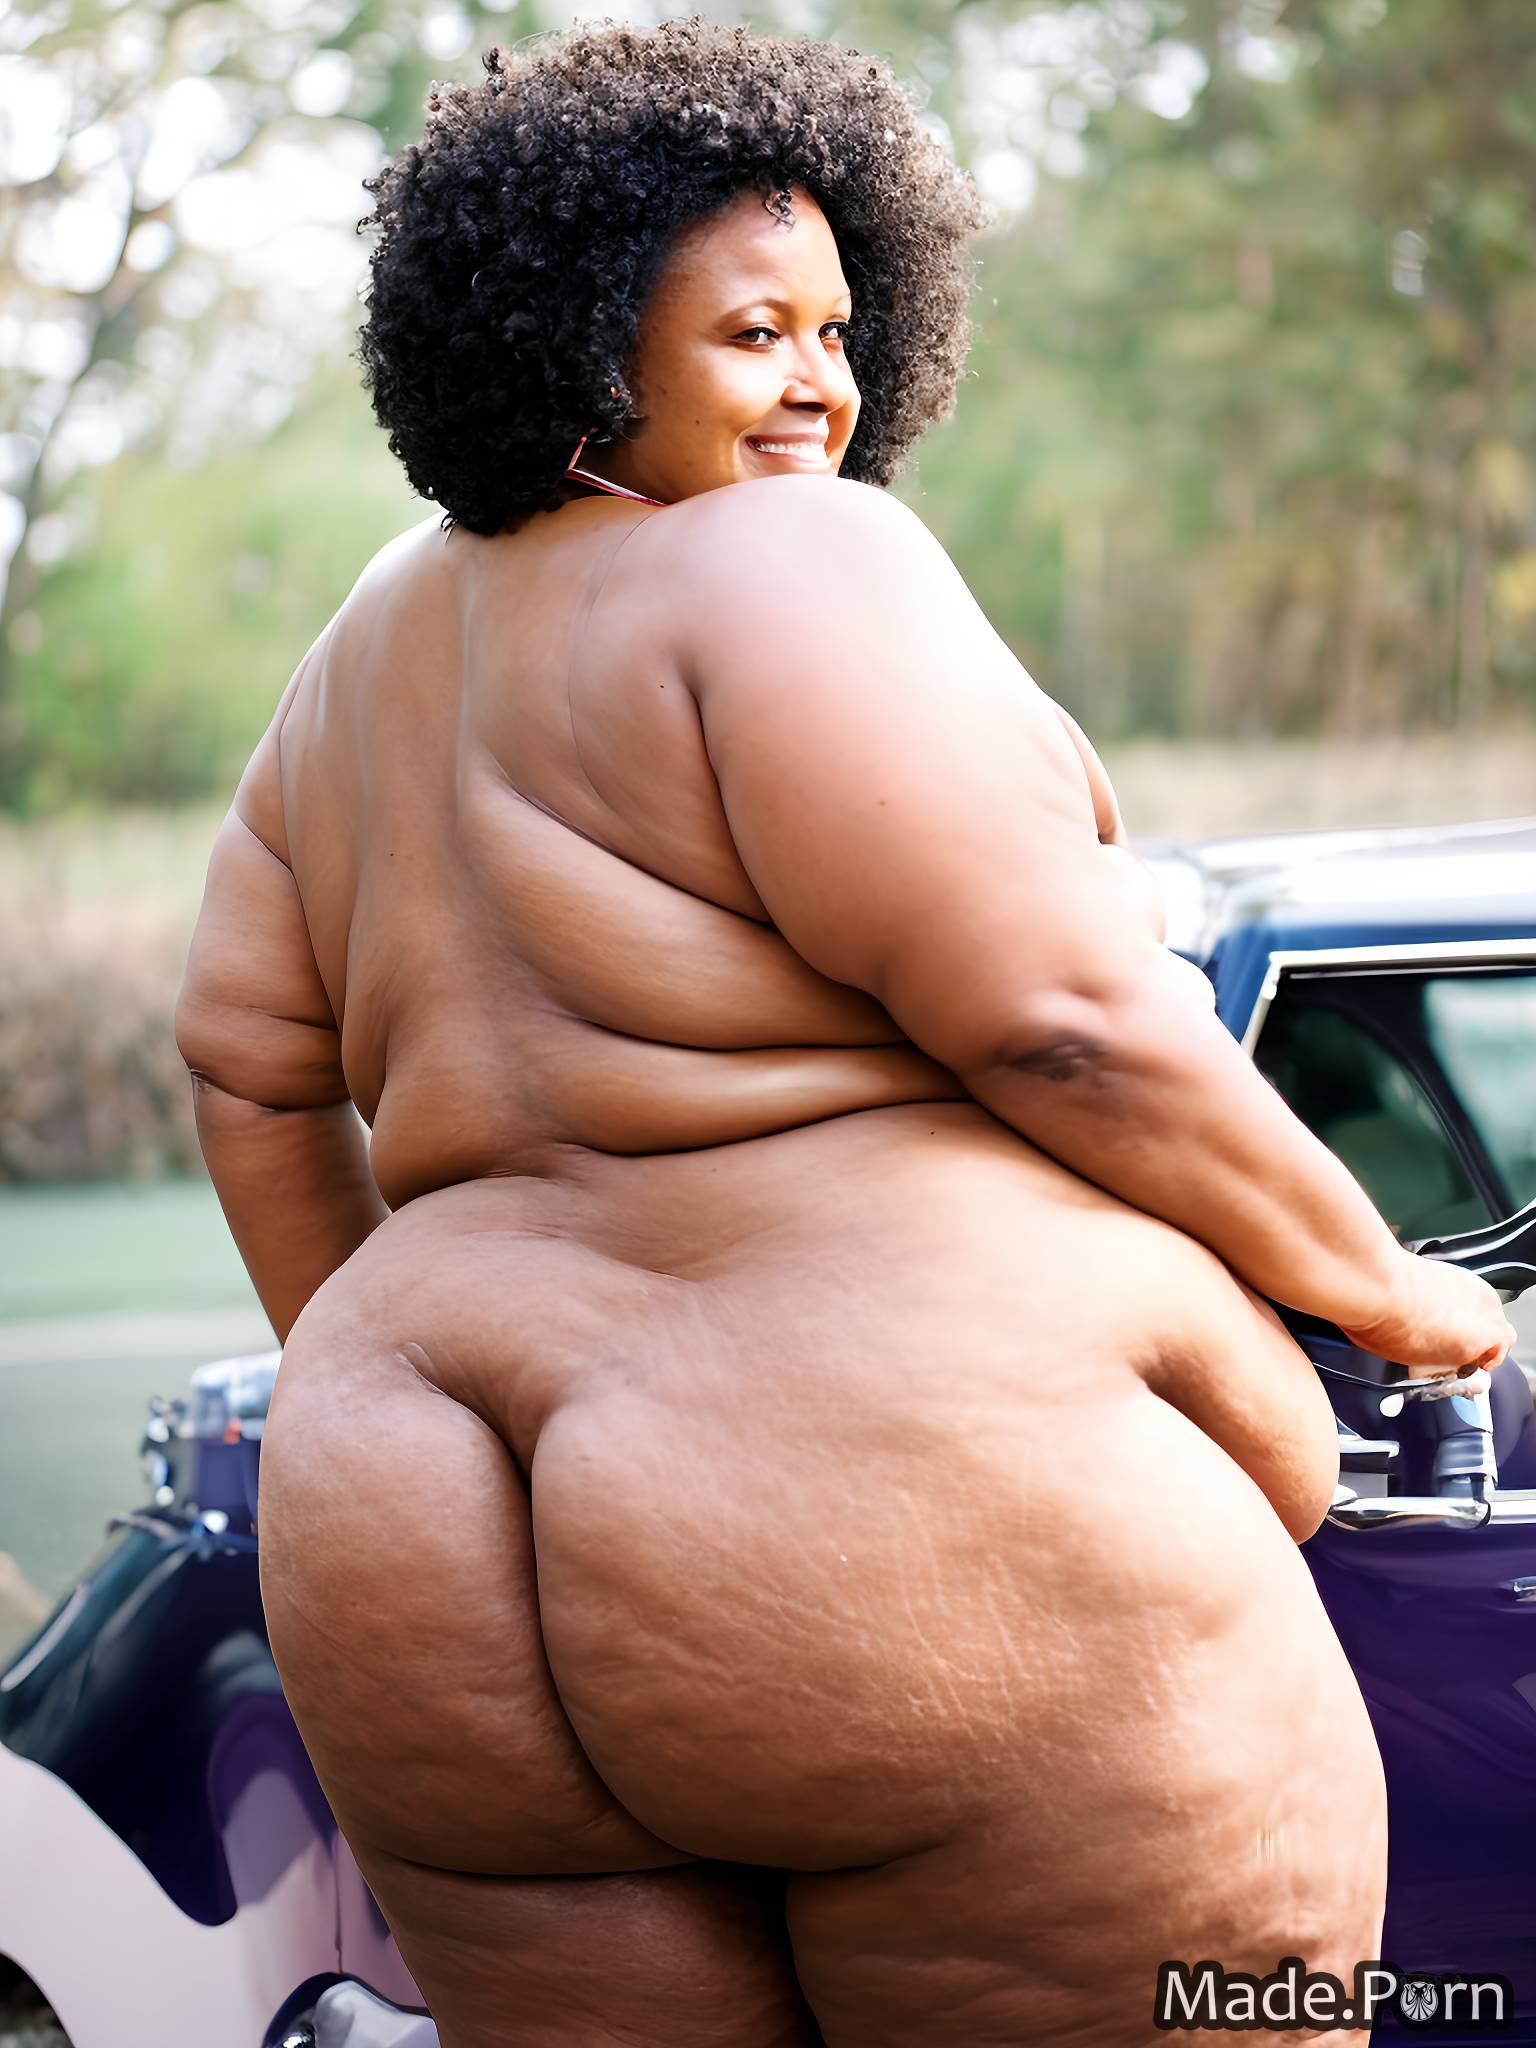 big hips african american movie sunglasses nude woman motorcycle